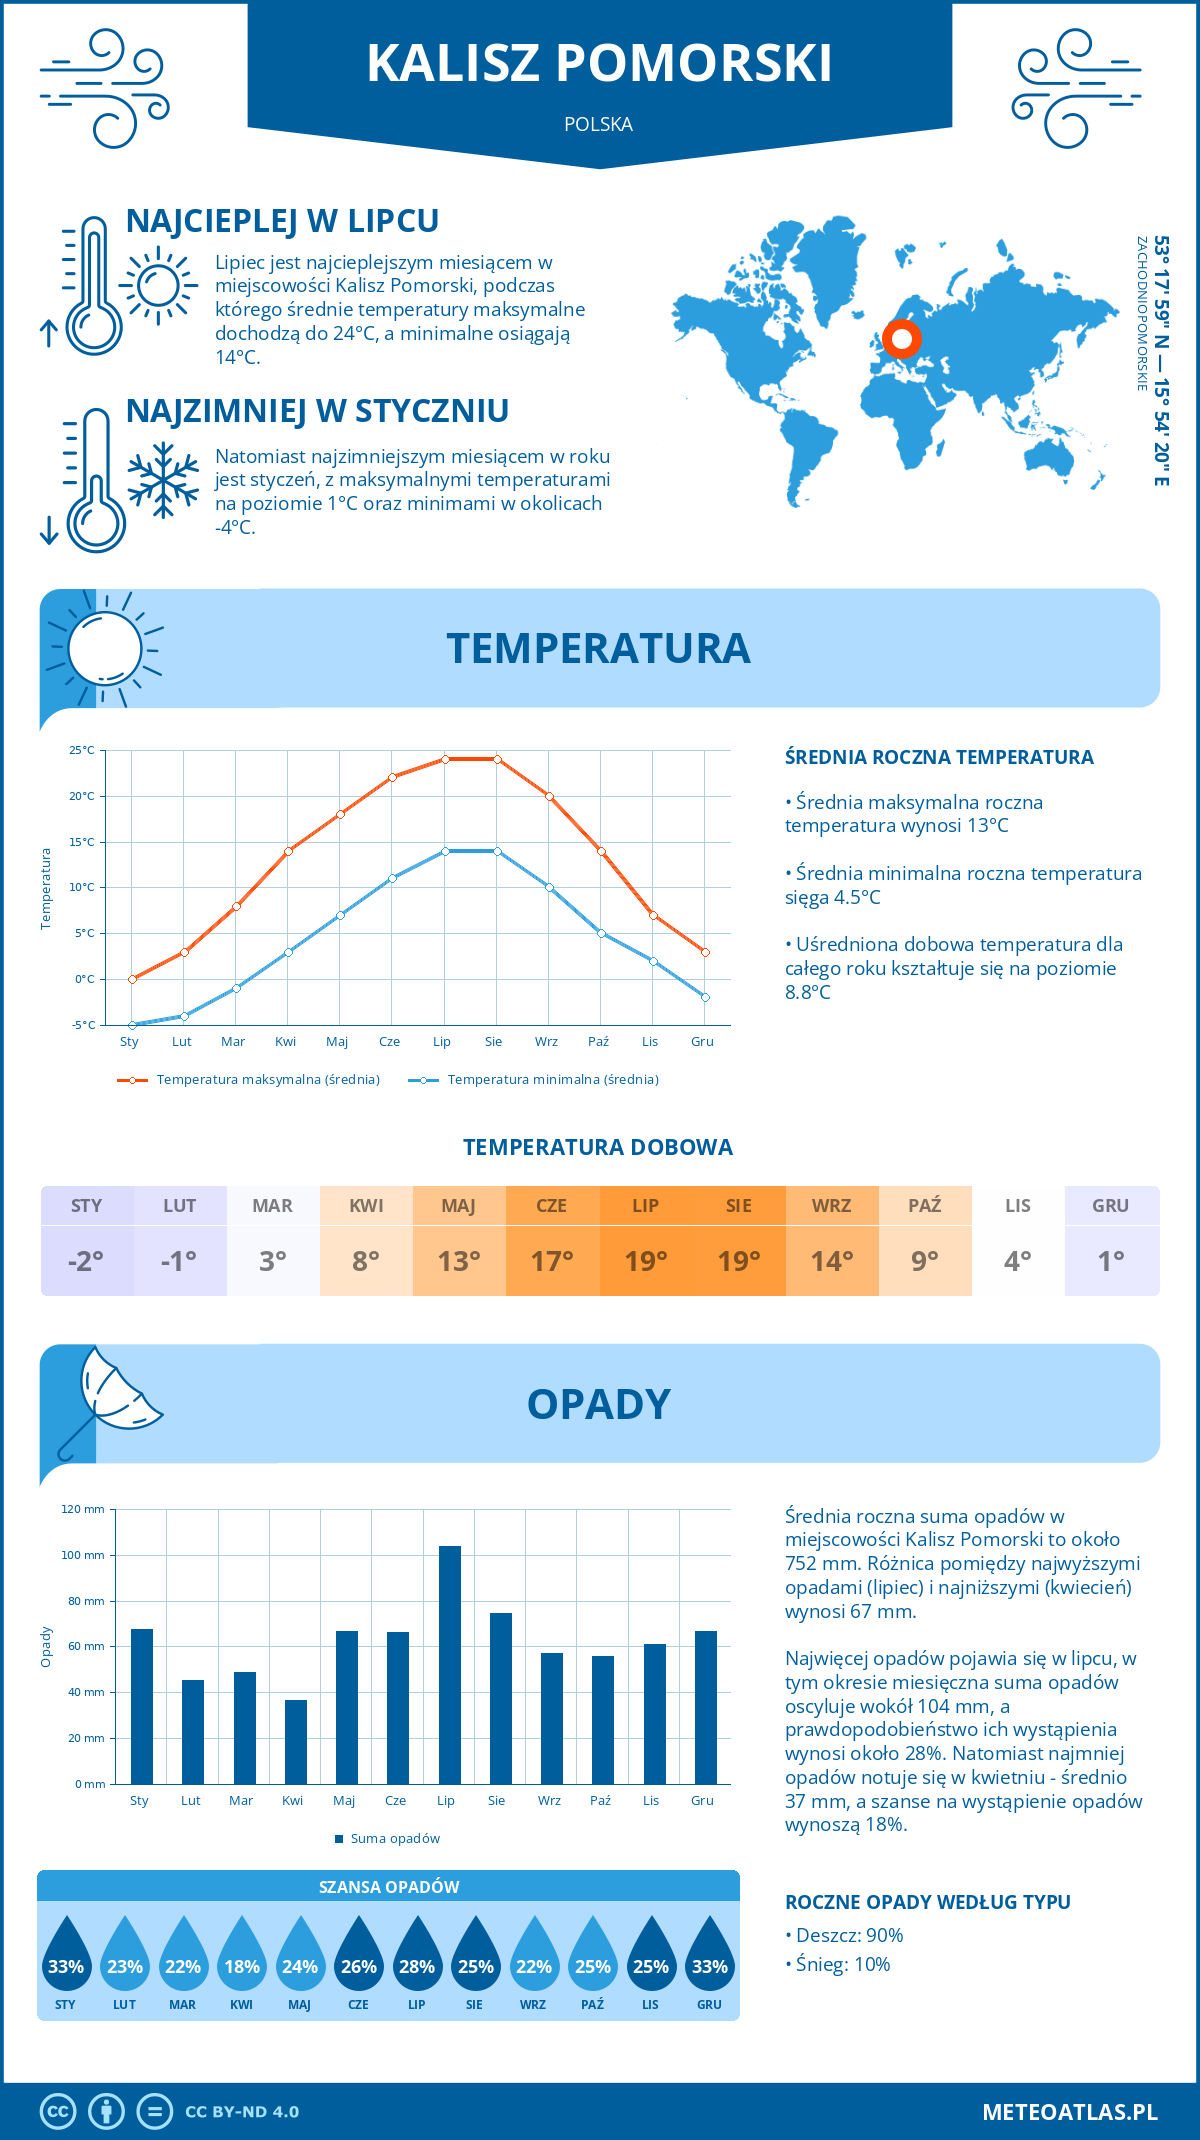 Pogoda Kalisz Pomorski (Polska). Temperatura oraz opady.